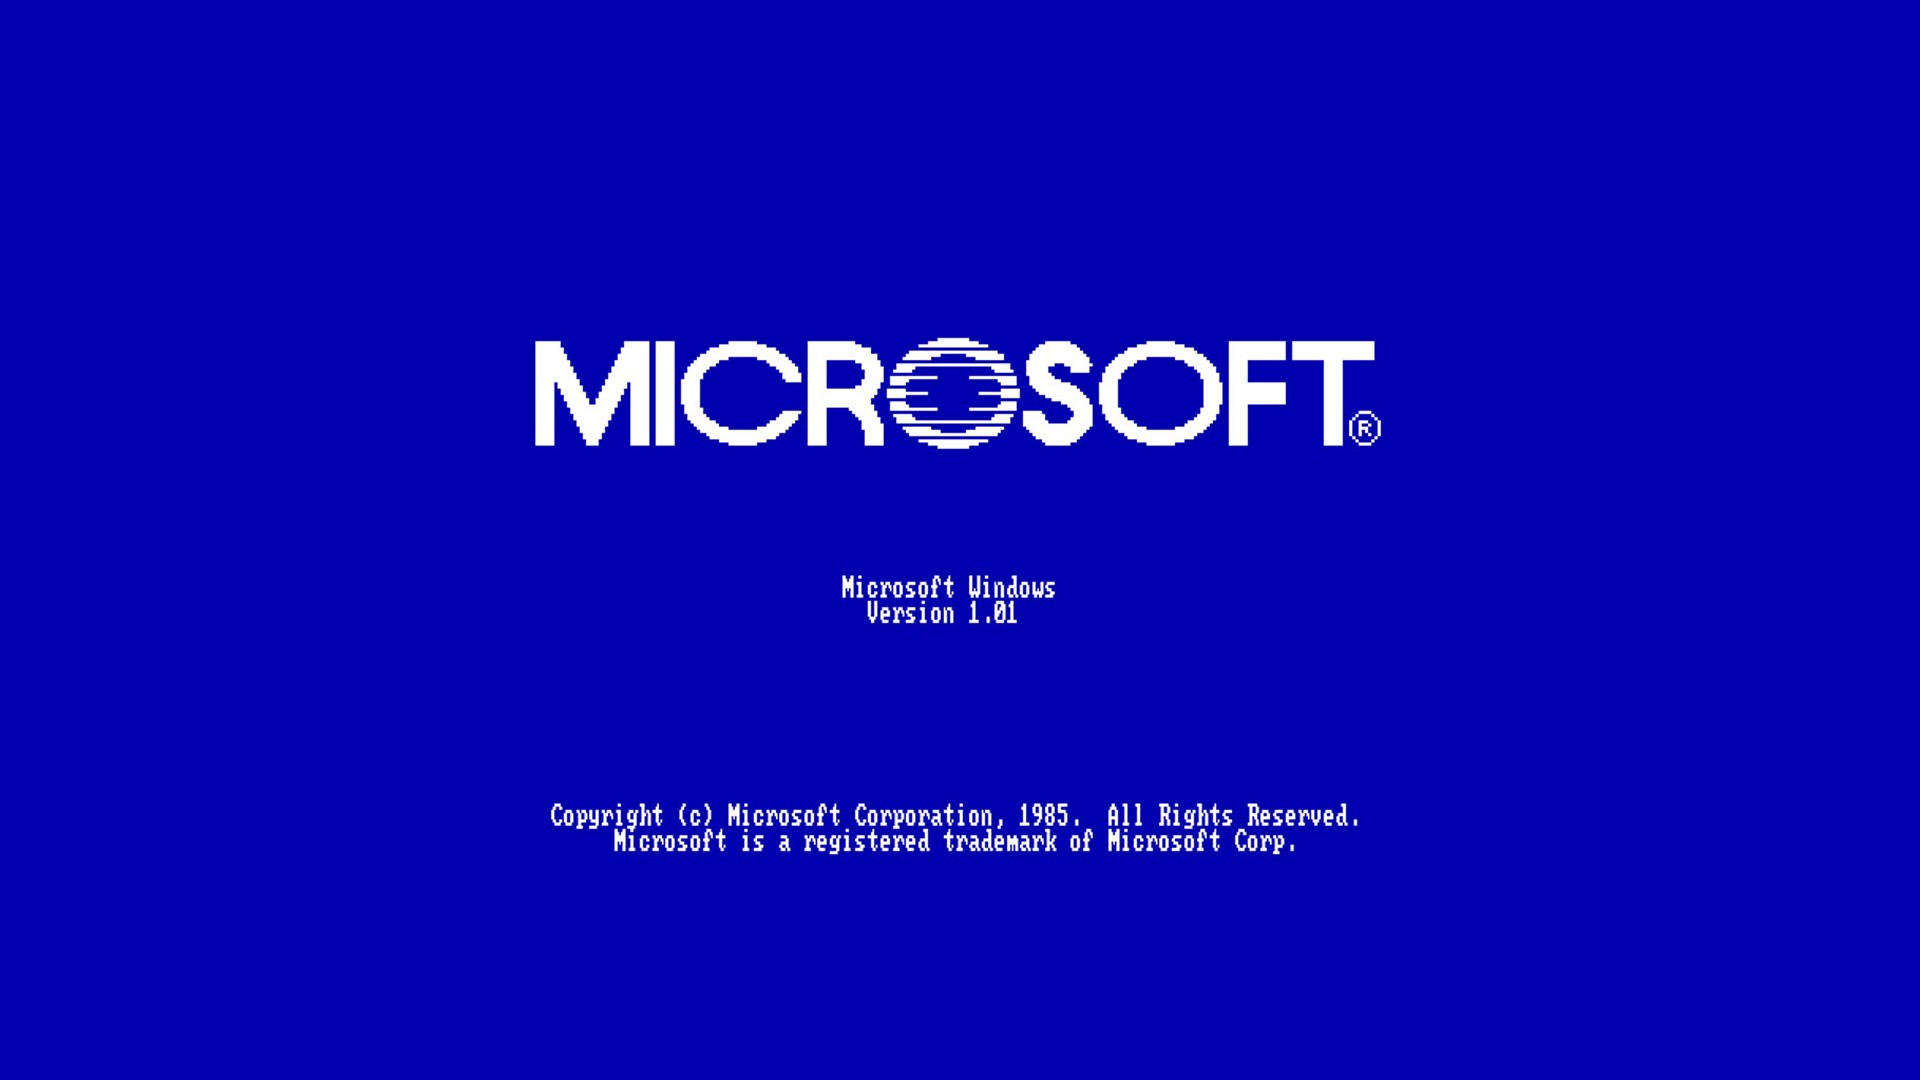 General 1920x1080 Microsoft Microsoft Windows operating system minimalism vintage simple background typography blue background 1985 (Year)